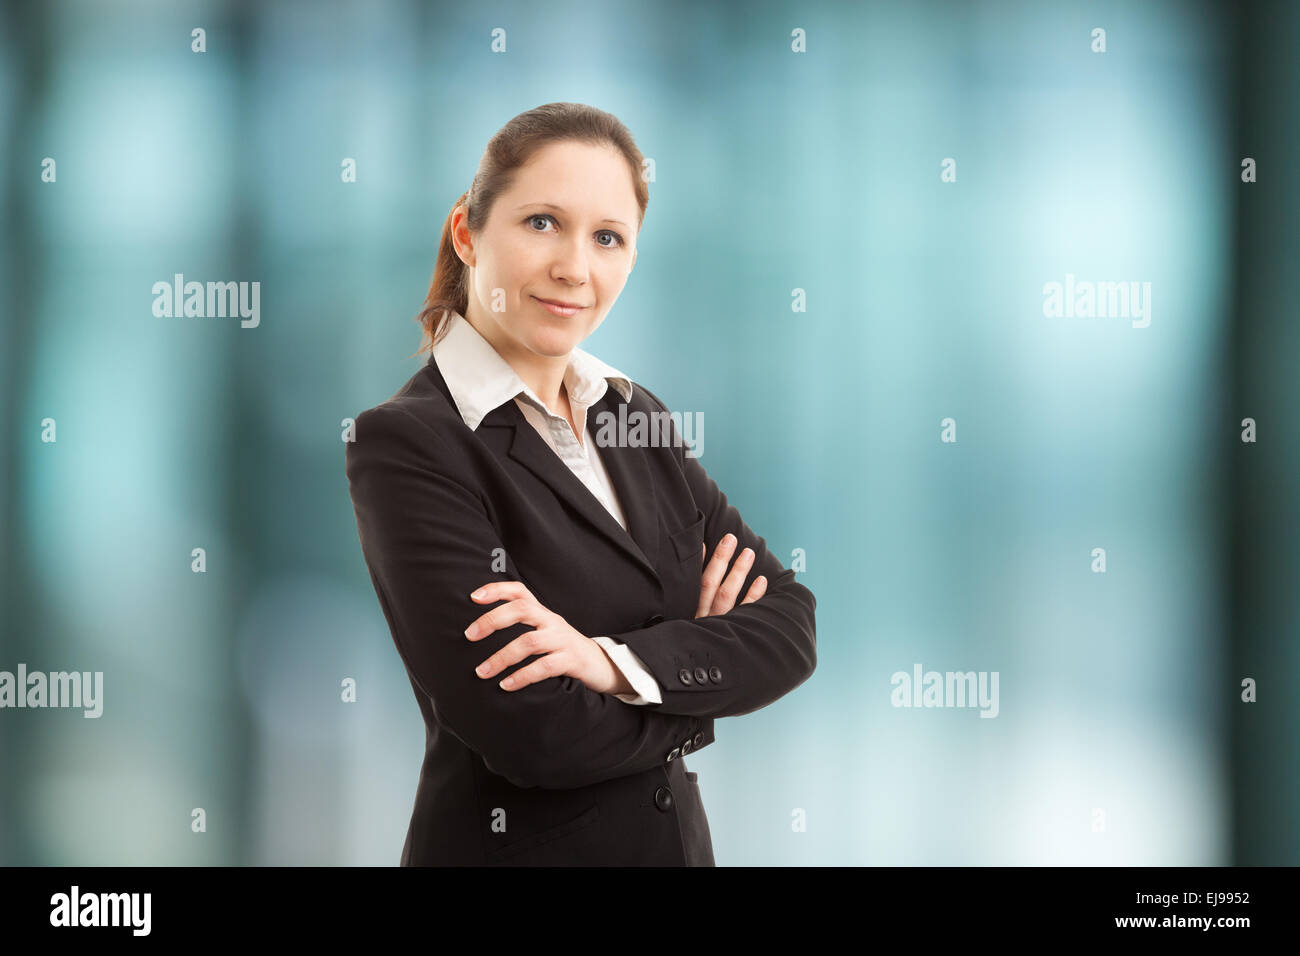 Business woman Stock Photo - Alamy